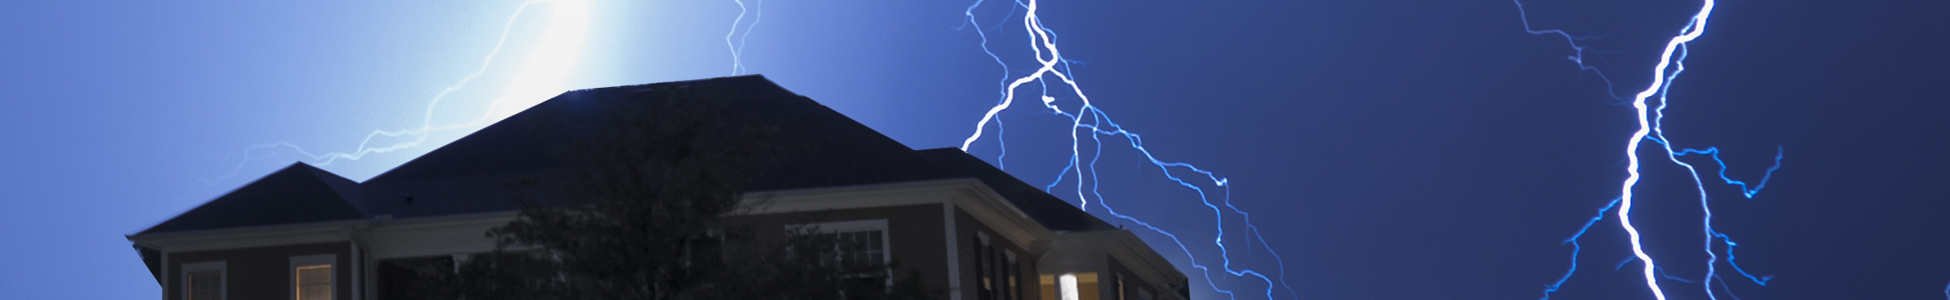 Lightning strikes near house in the evening